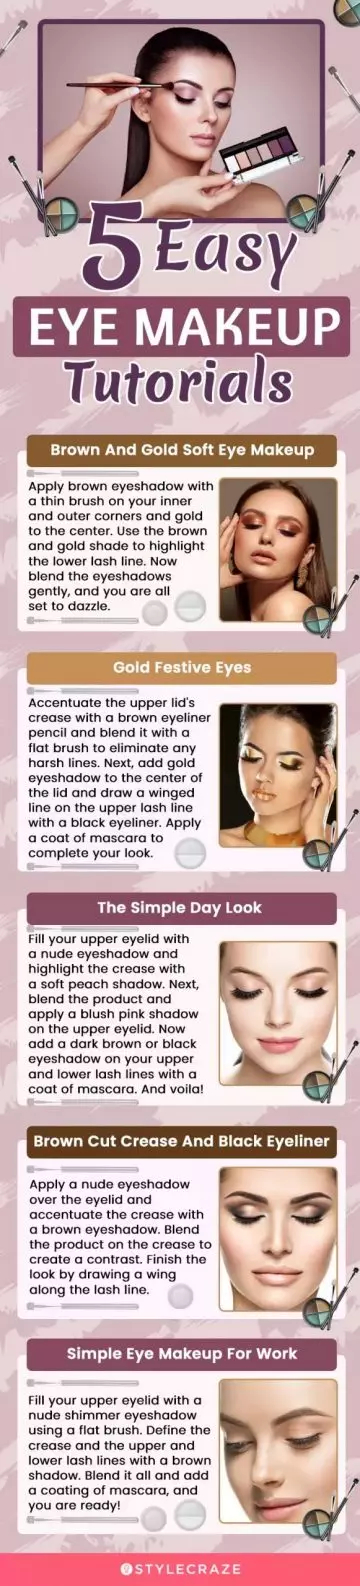 5 easy eye makeup tutorials (infographic)